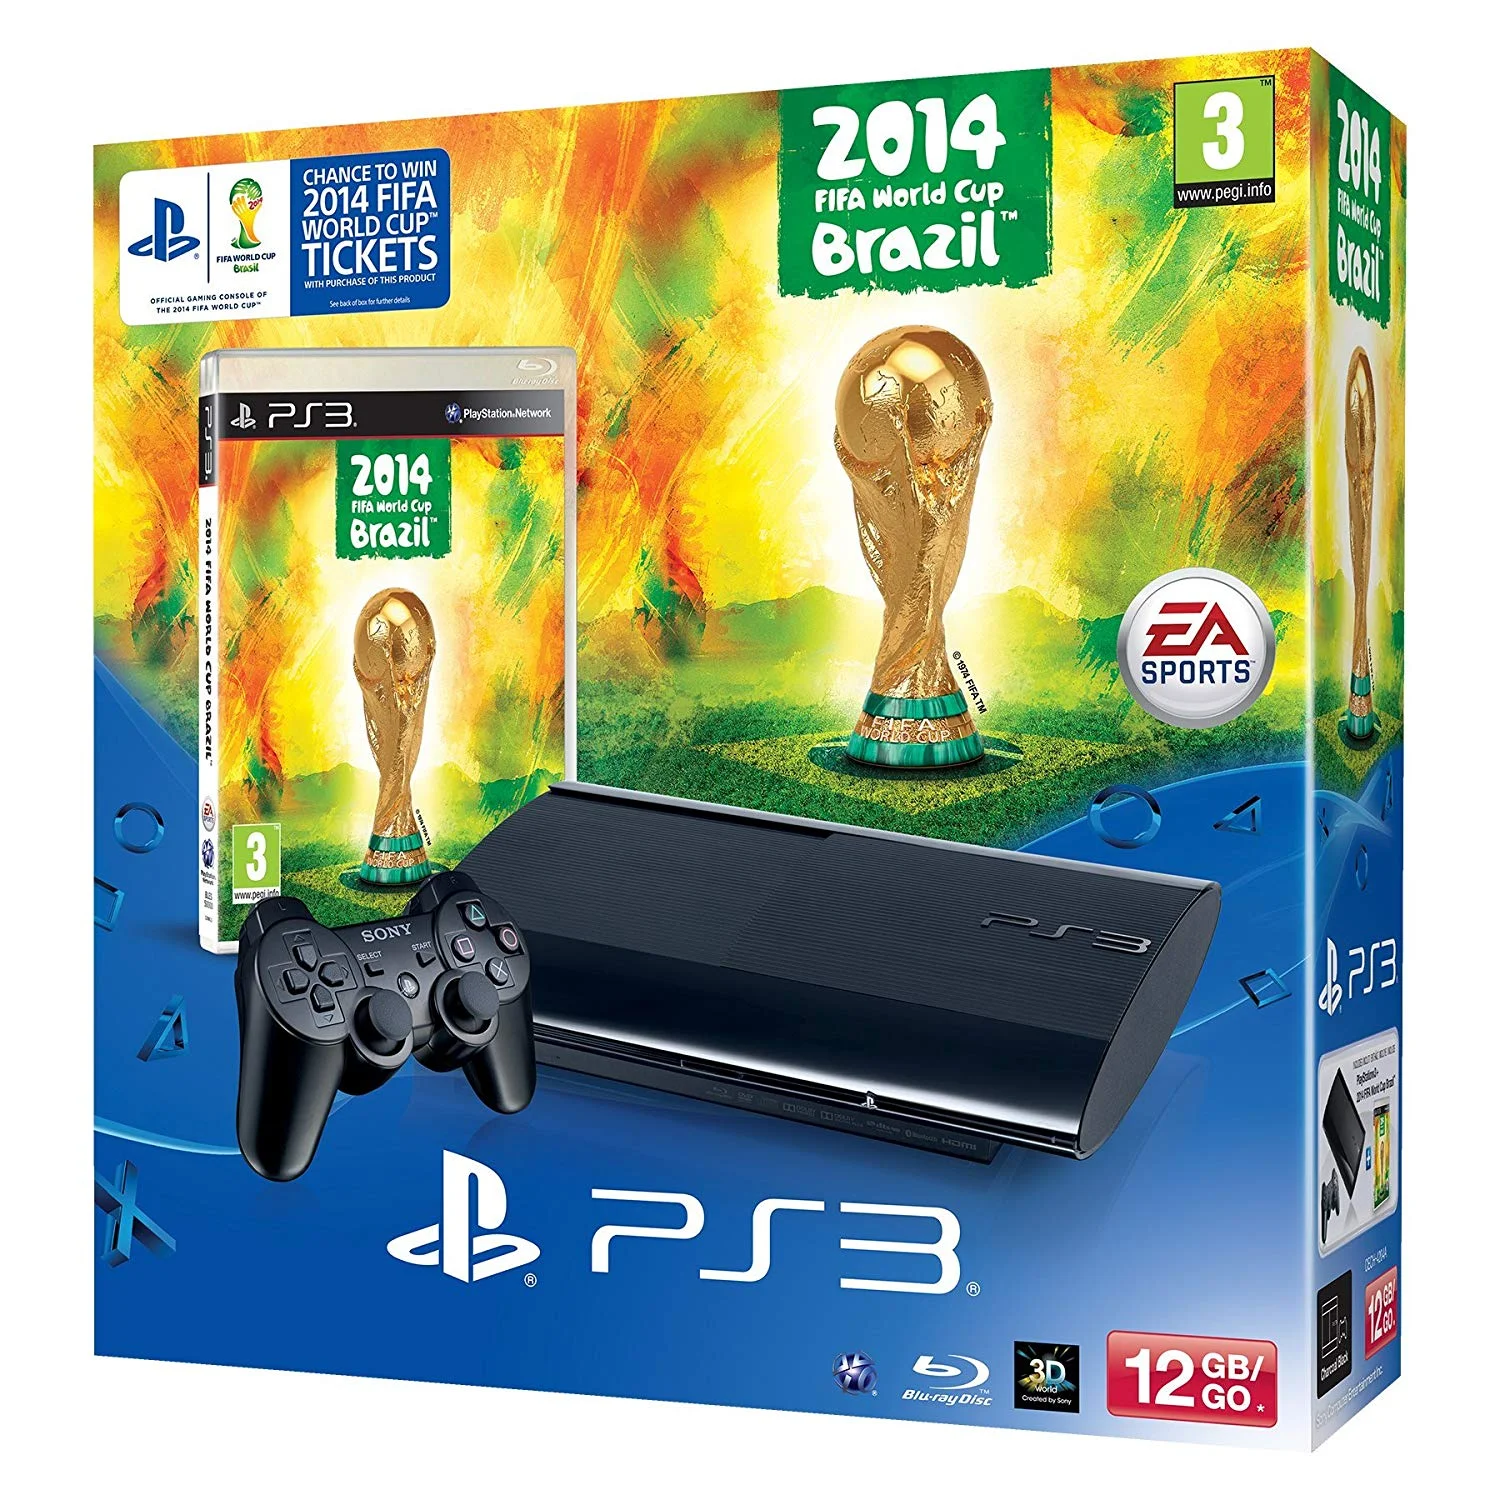 CV Sony 3 Slim 2014 FIFA World Cup [UK]